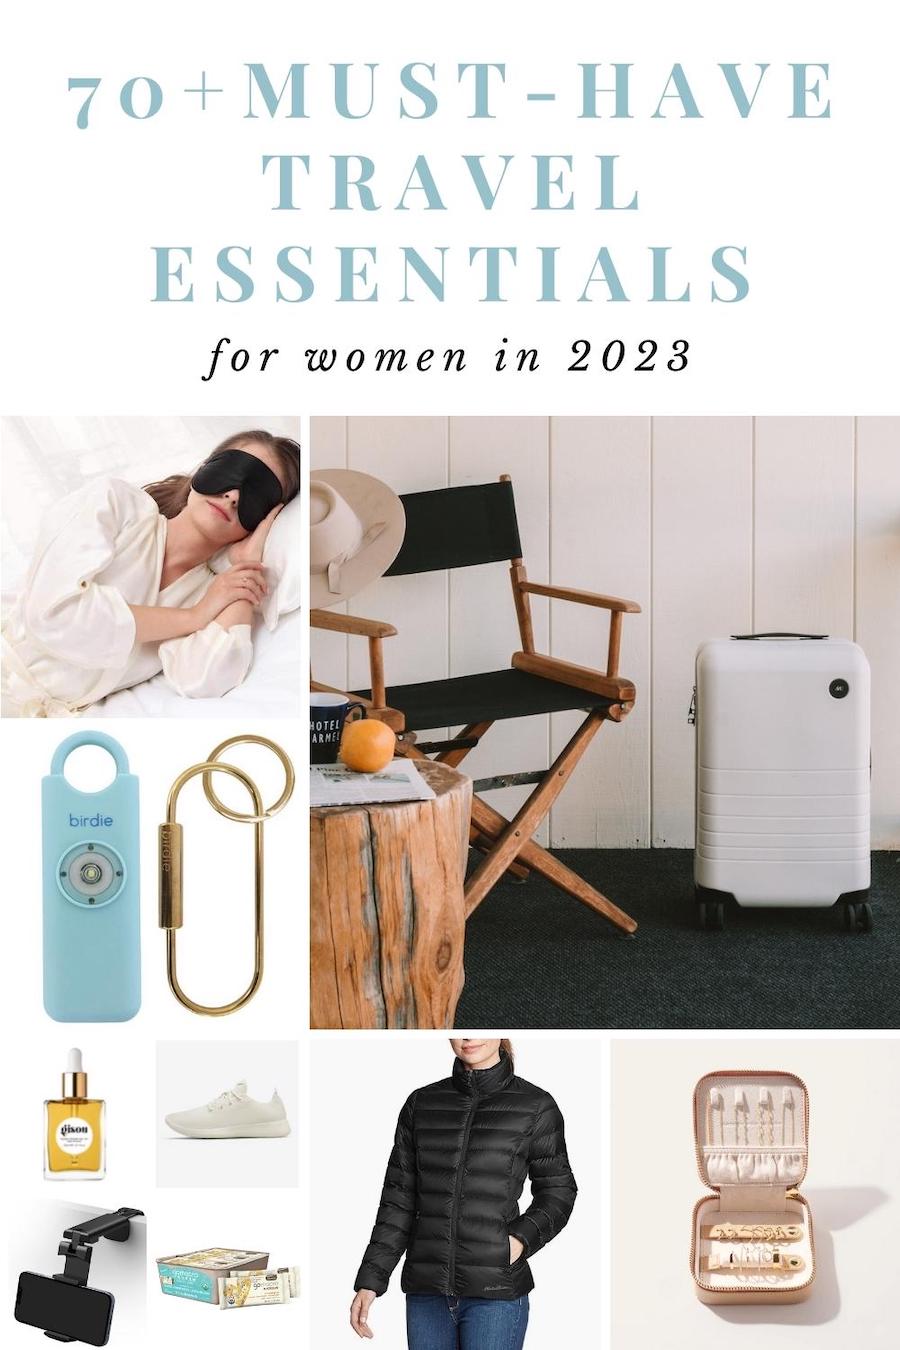 https://www.livelikeitstheweekend.com/wp-content/uploads/2022/10/travel-essentials-for-women-1.jpg